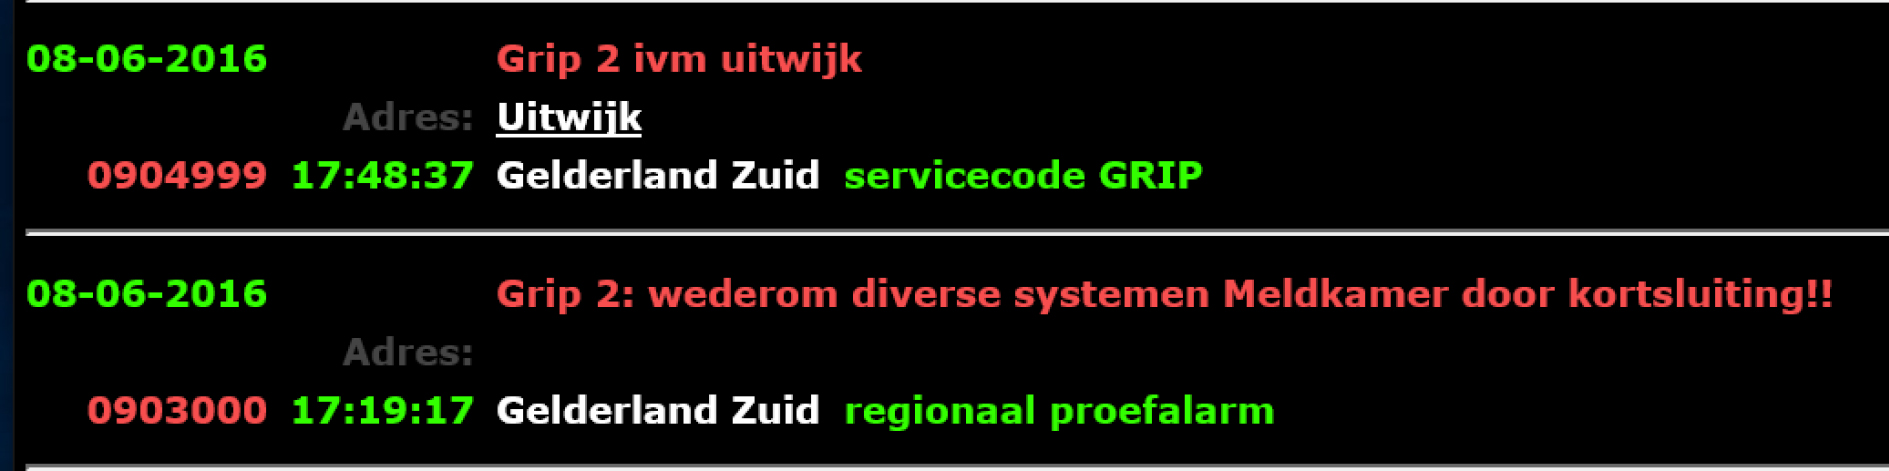 p2000_grip-2_rtr-nl